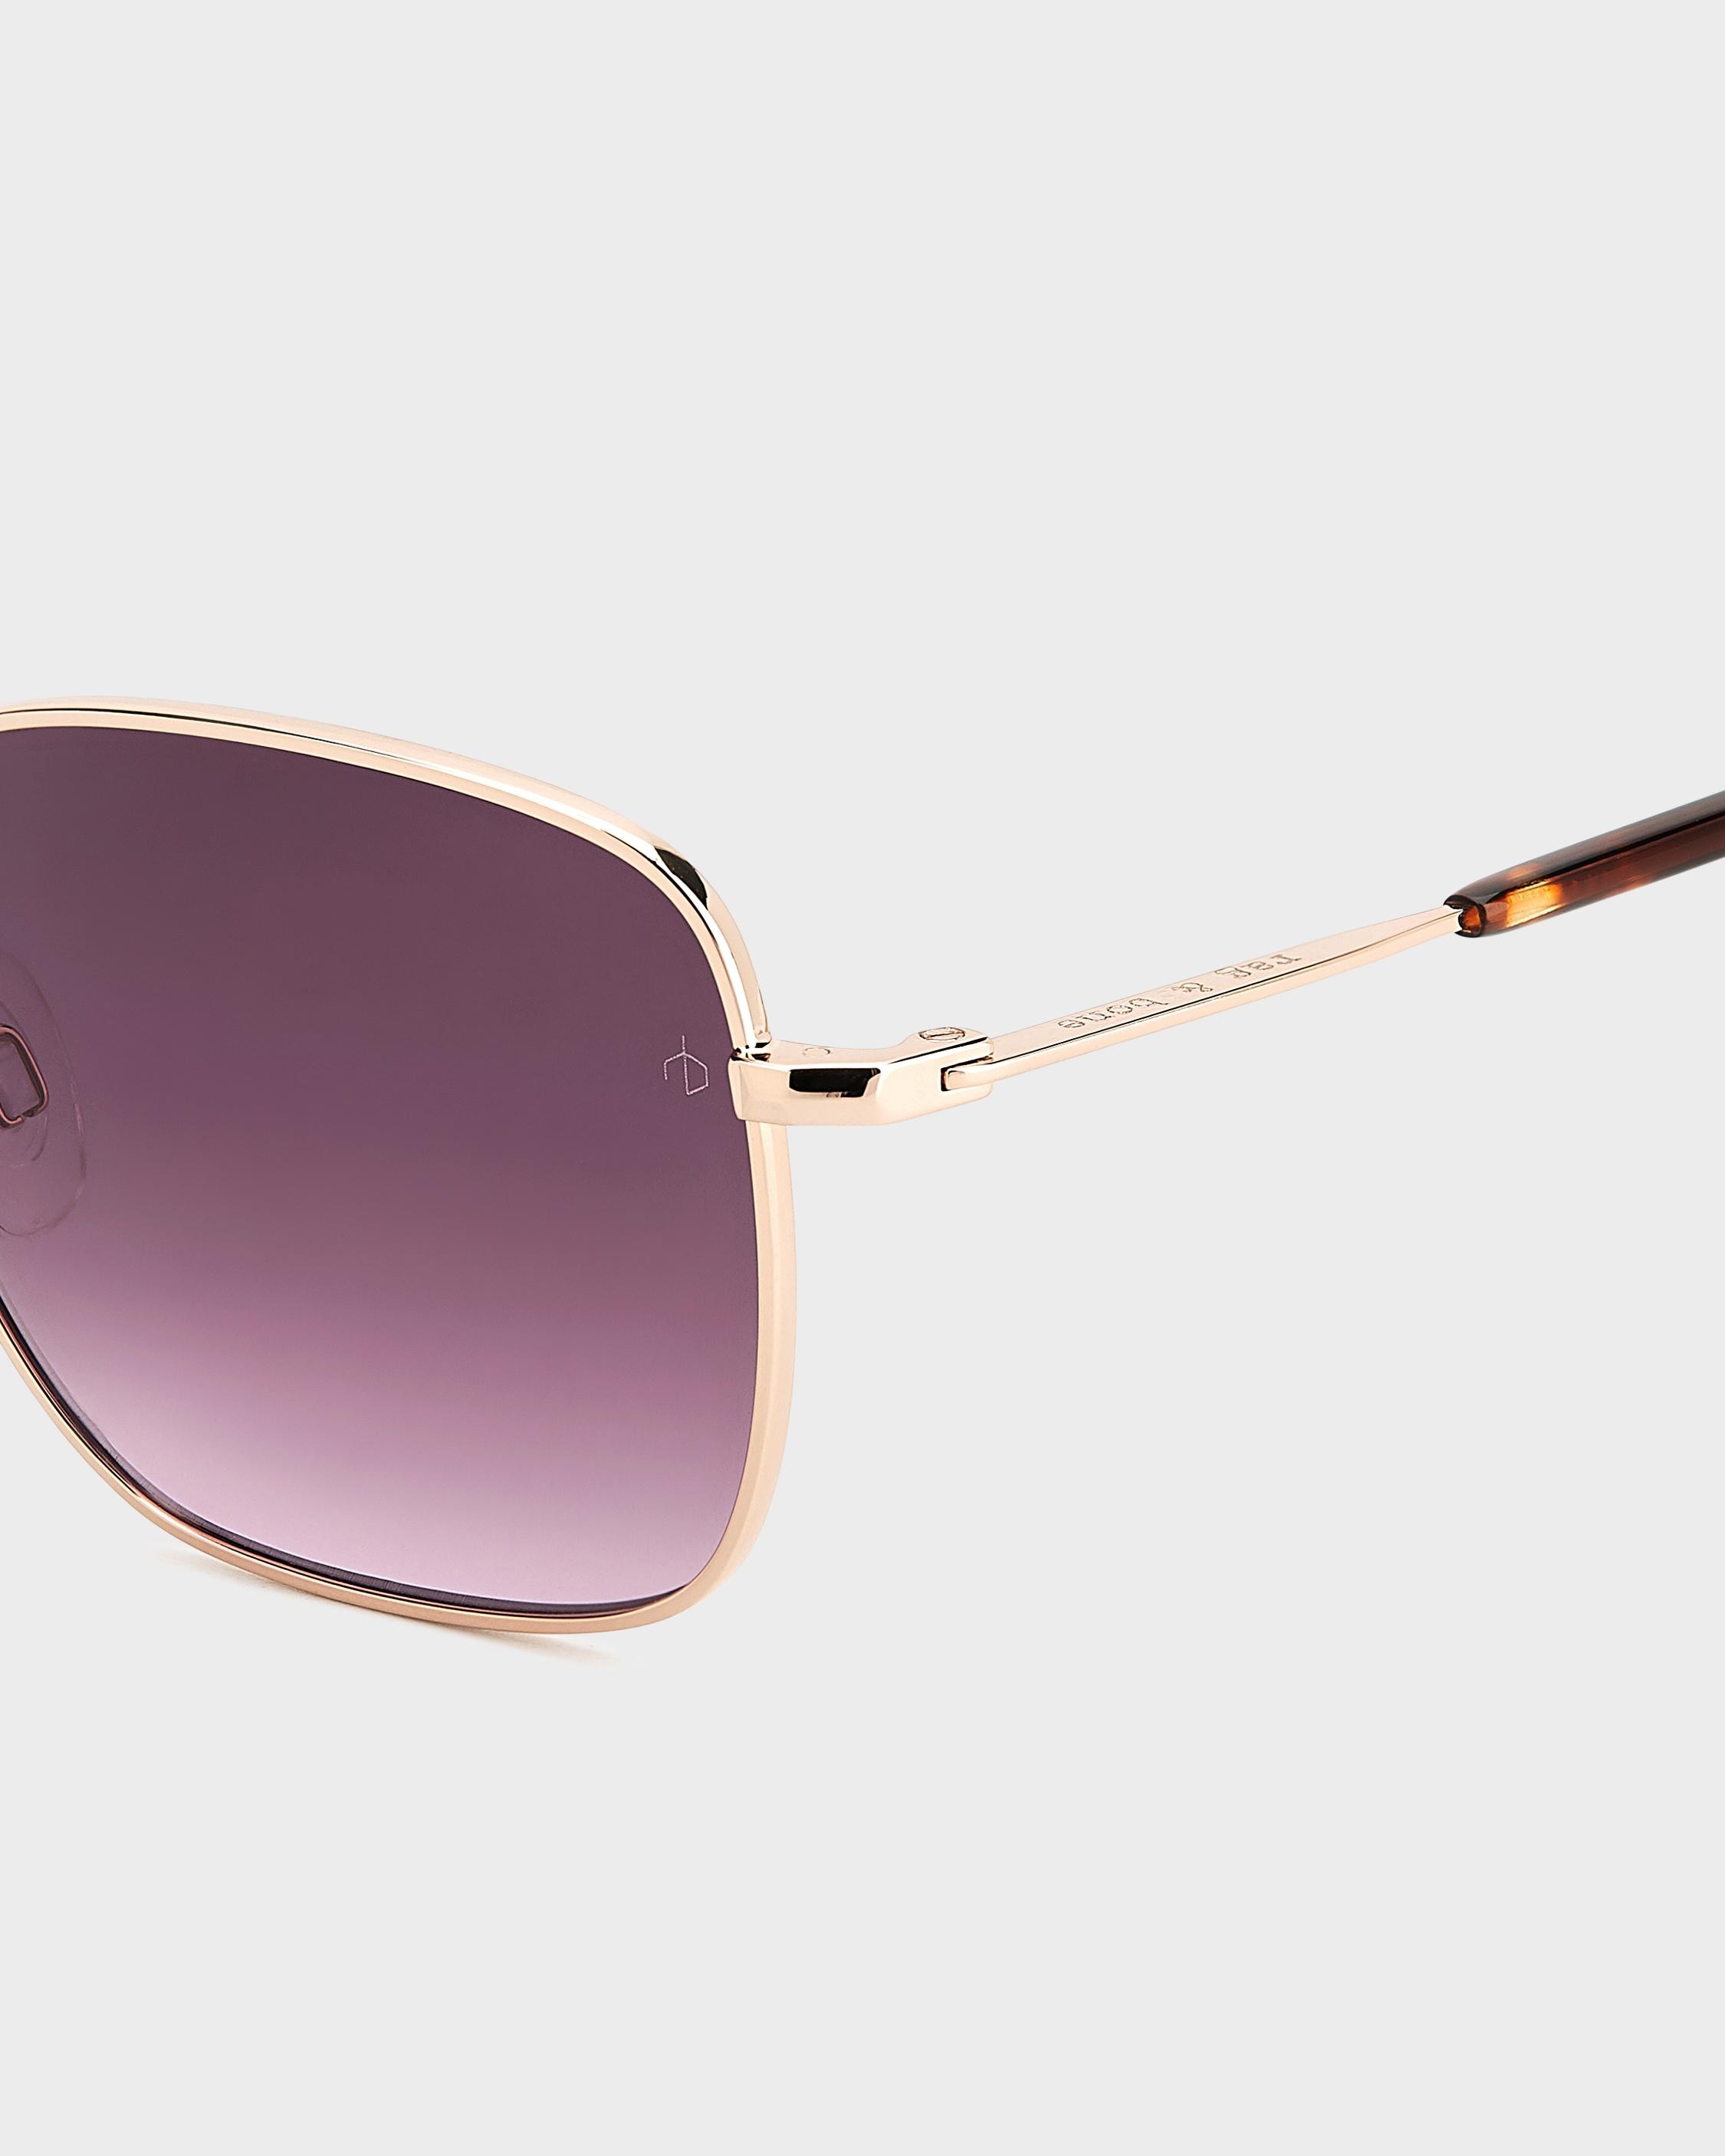 Breton
Square Sunglasses - 3